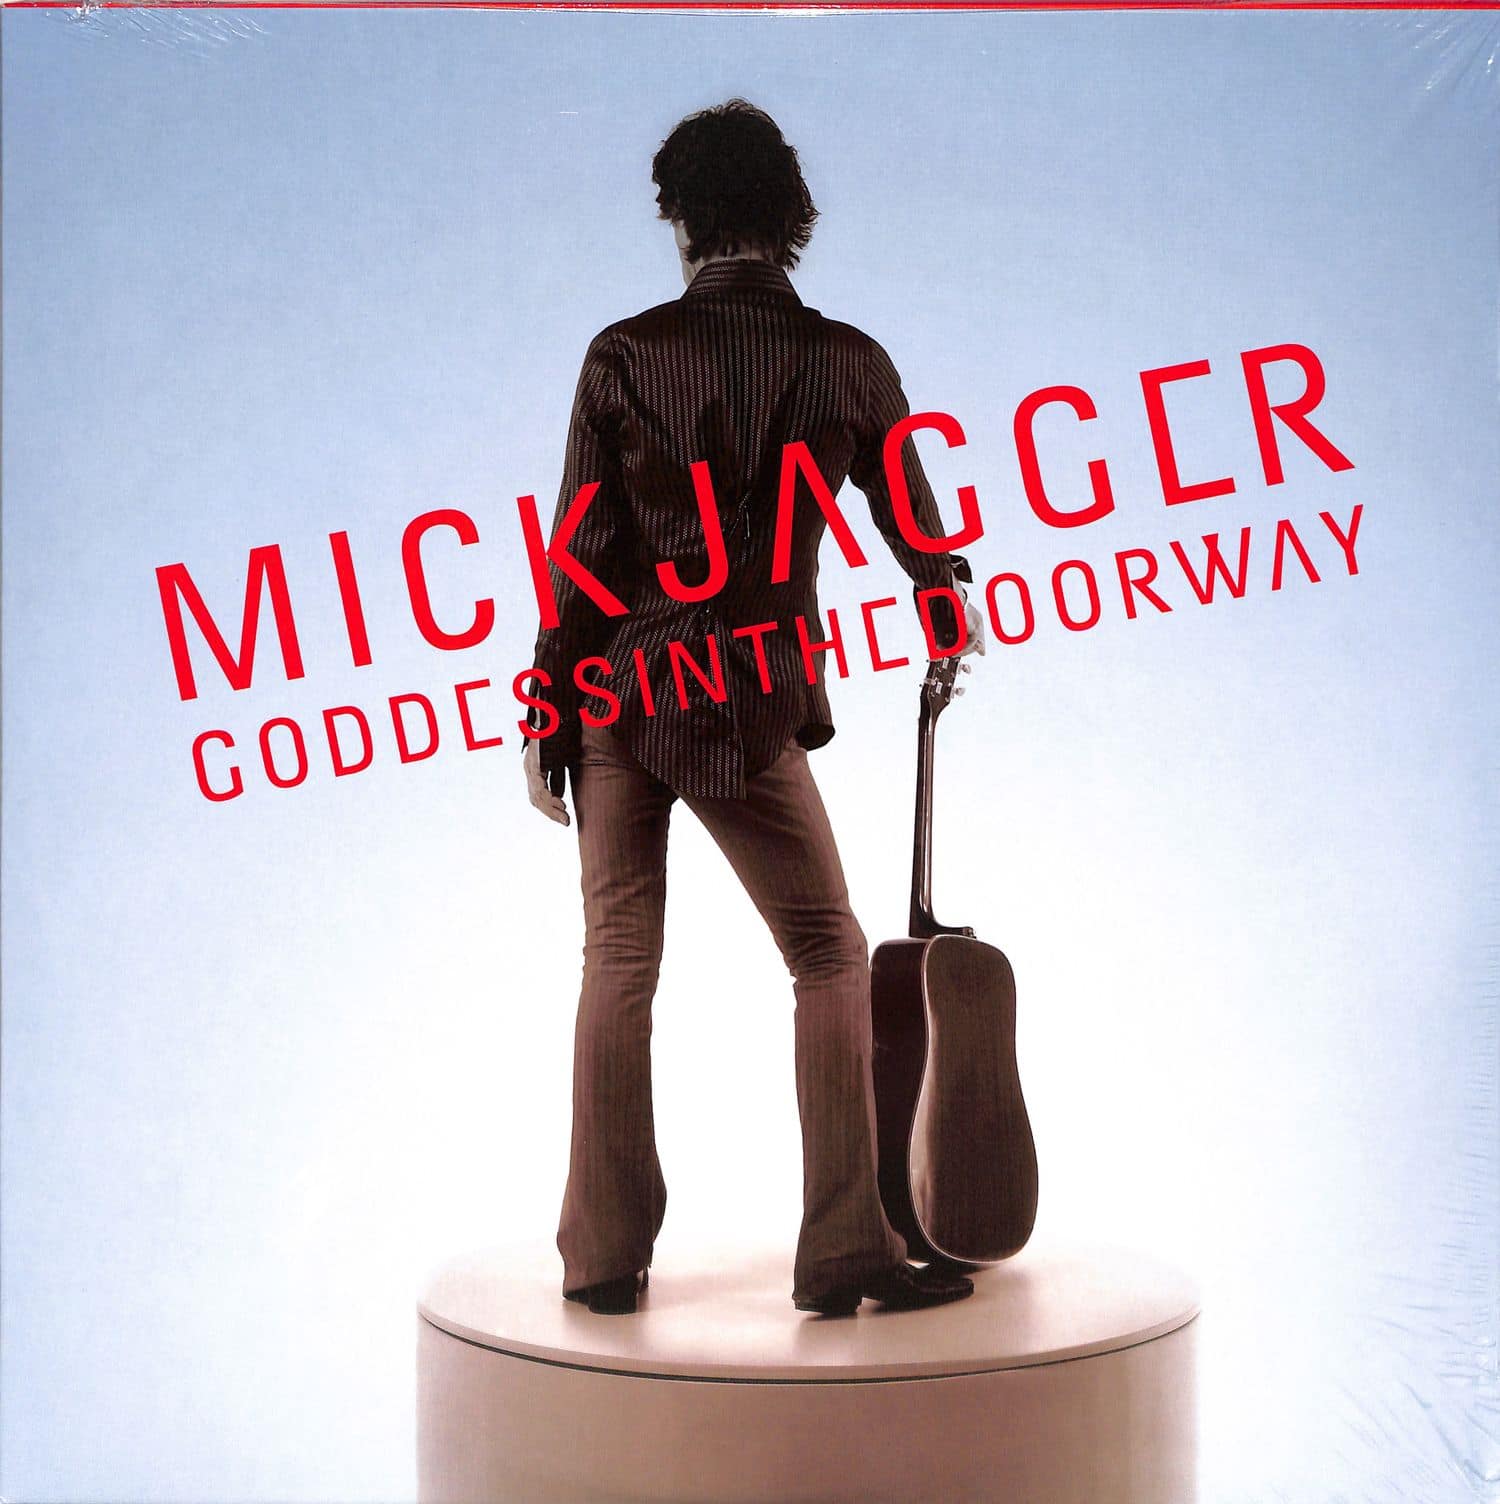 Mick Jagger - GODDESS IN THE DOORWAY 